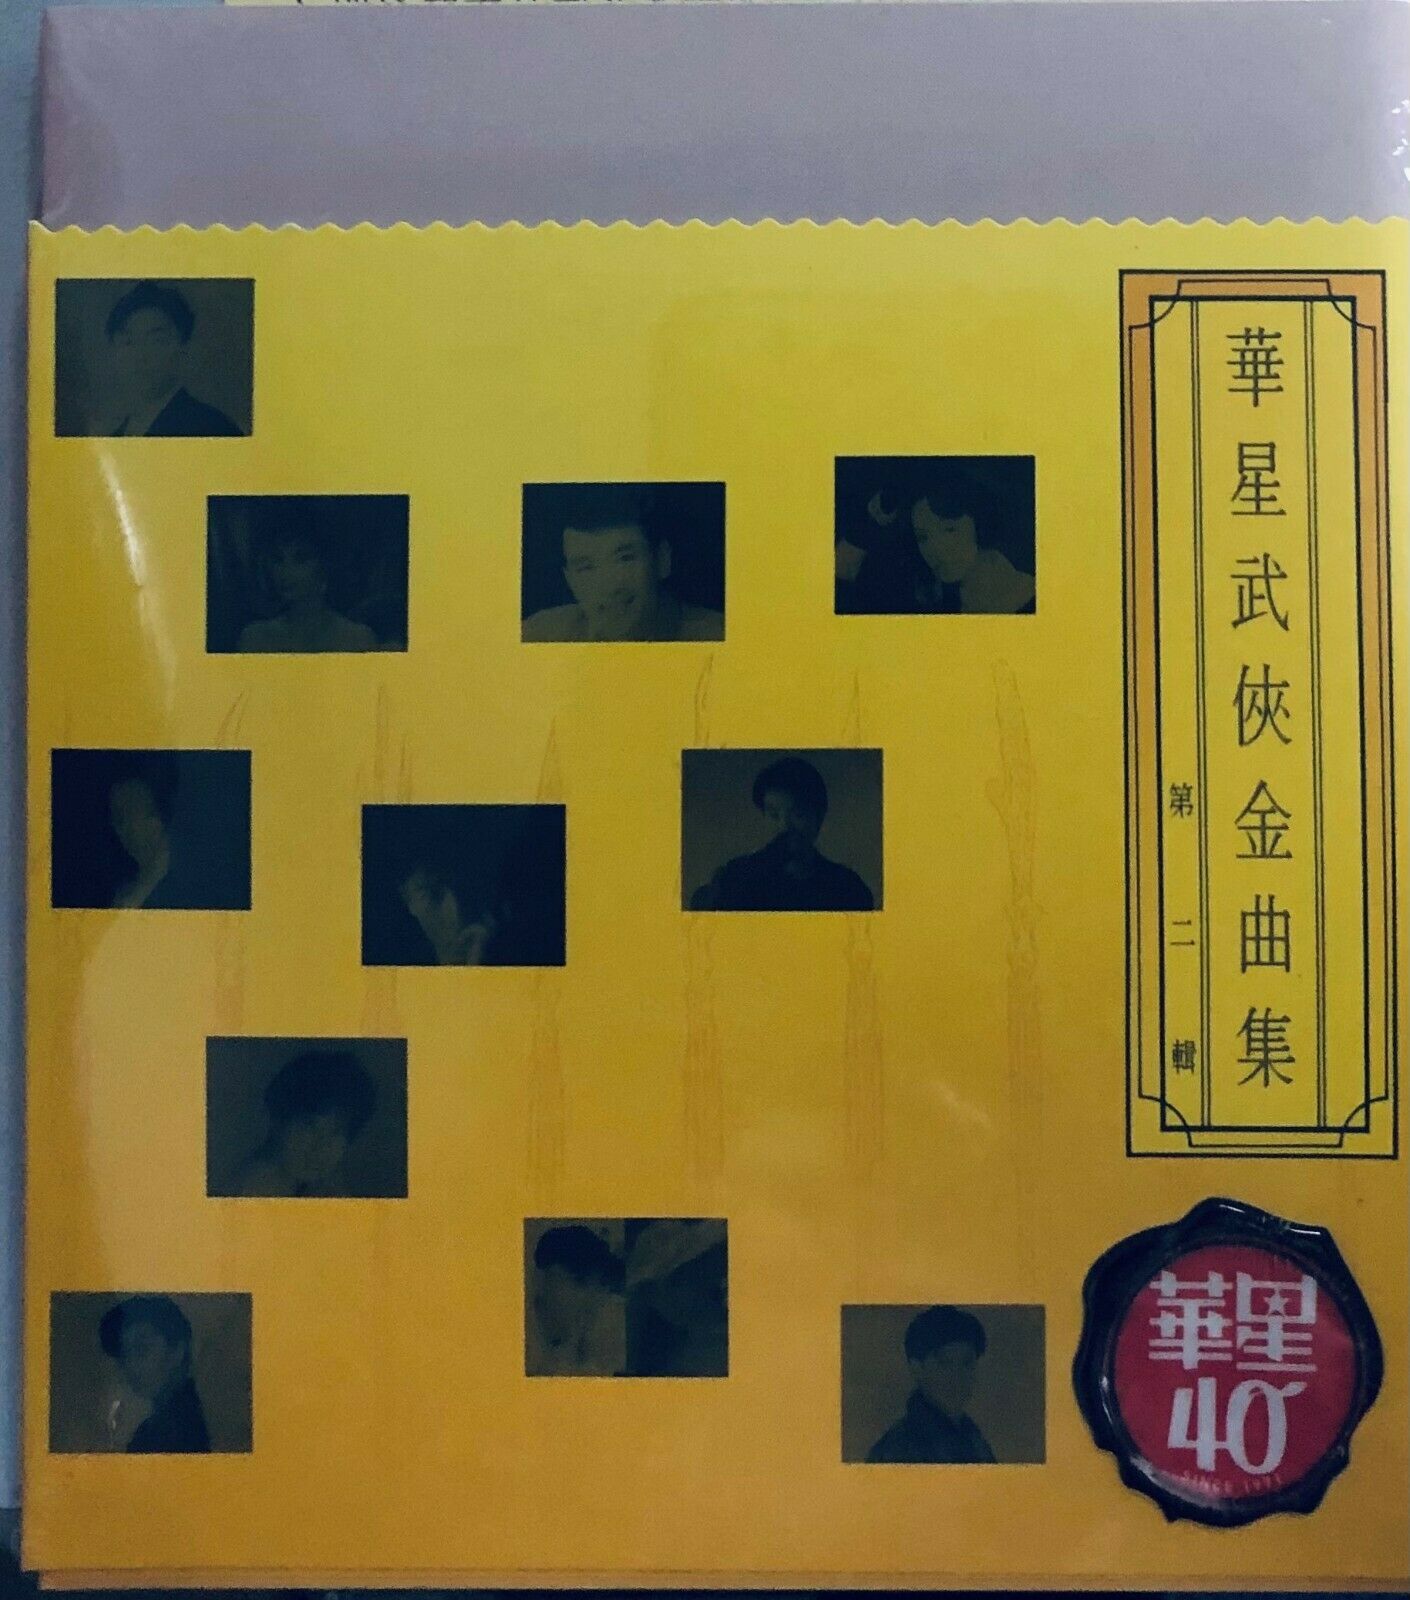 Capital Artists Theme Songs 華星 武俠金曲集2 GOLD DISC CD